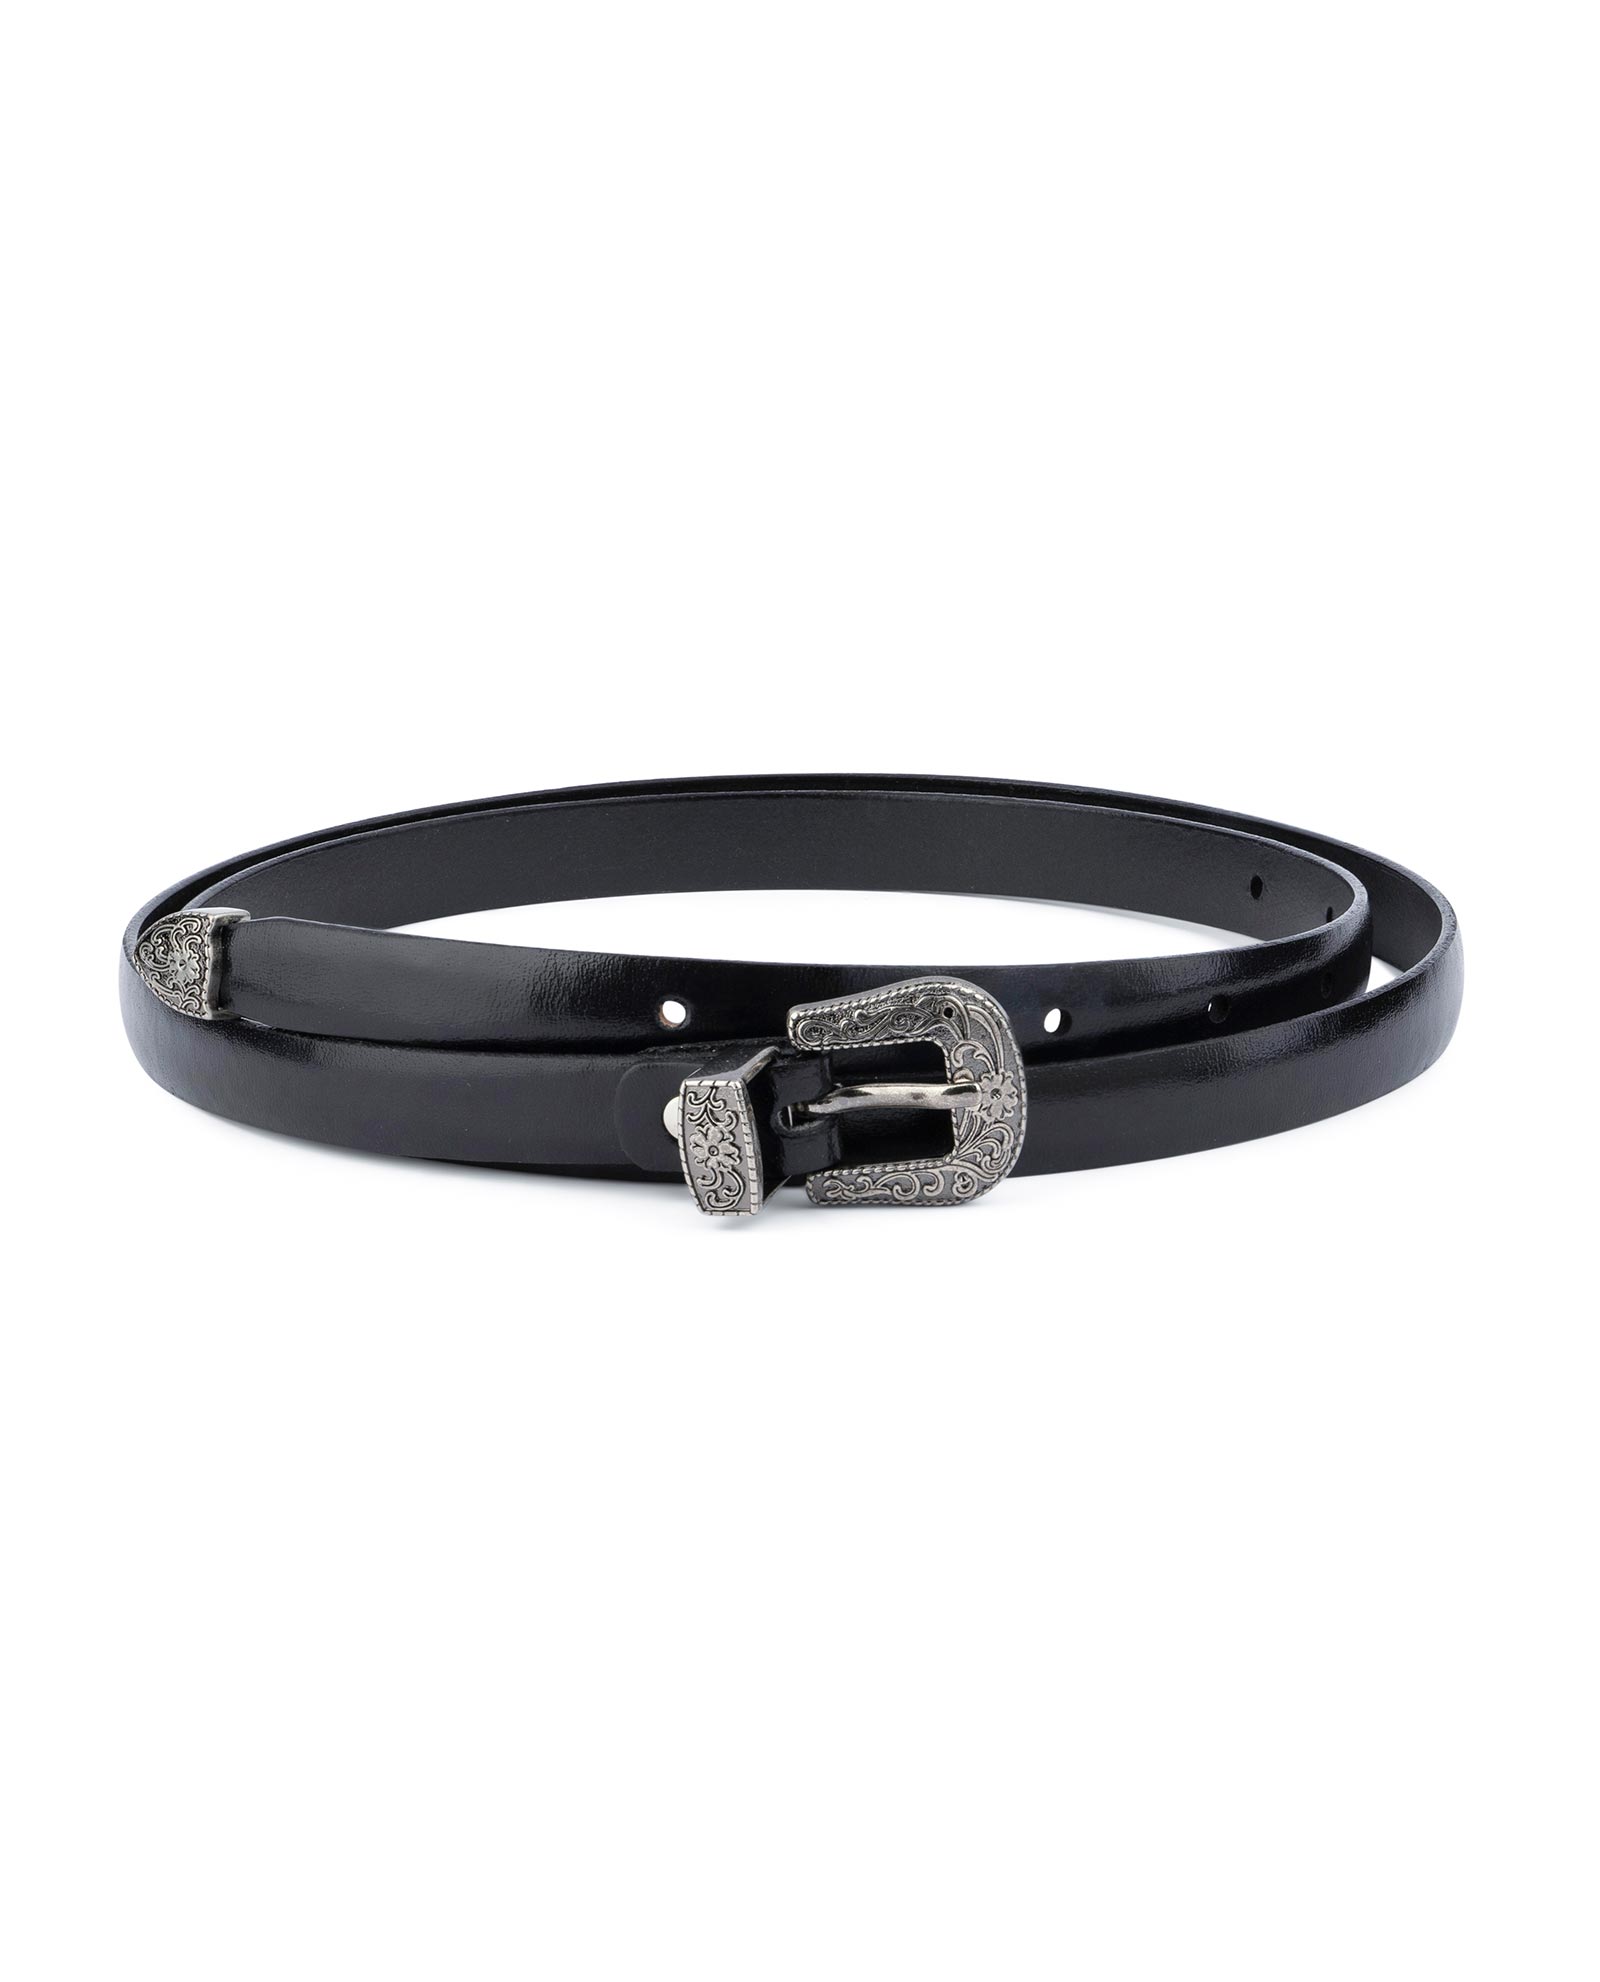 Buy Western Belt for Women | Thin Black Leather 1.5 cm - Capo Pelle